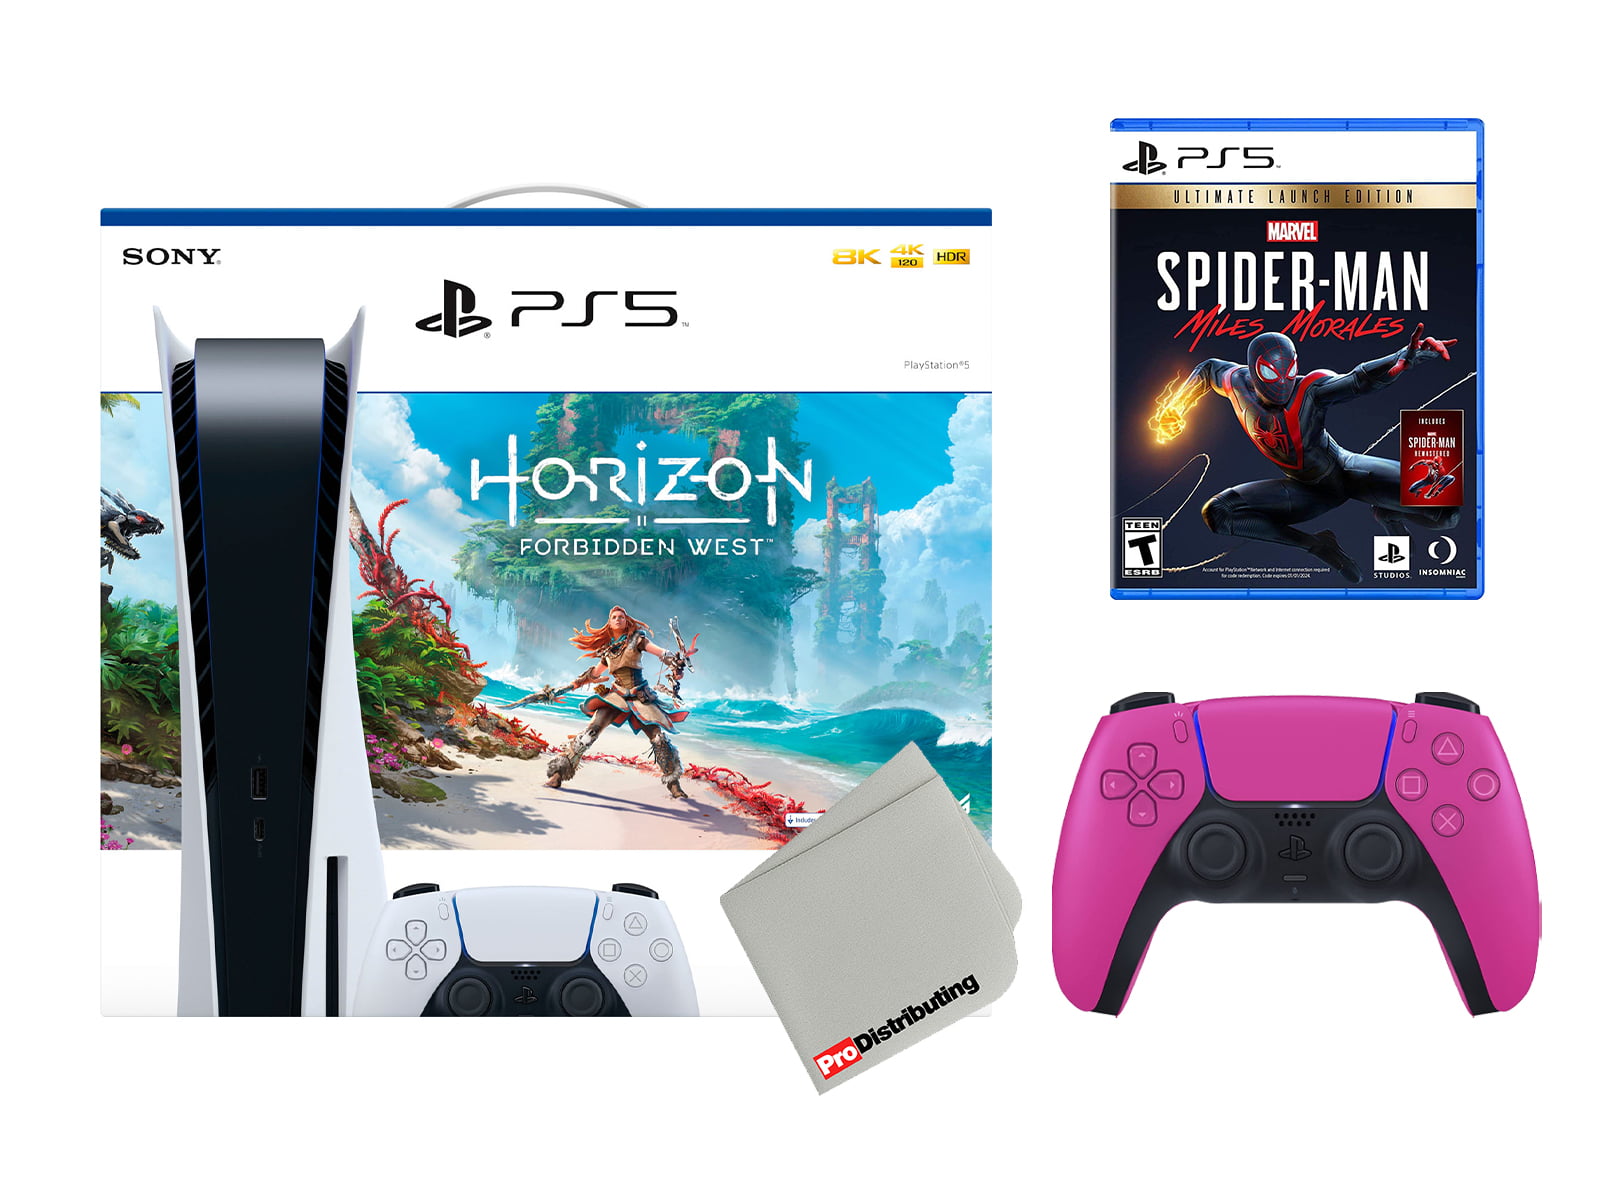 PlayStation 5 Exclusive Horizon Forbidden West Complete Edition